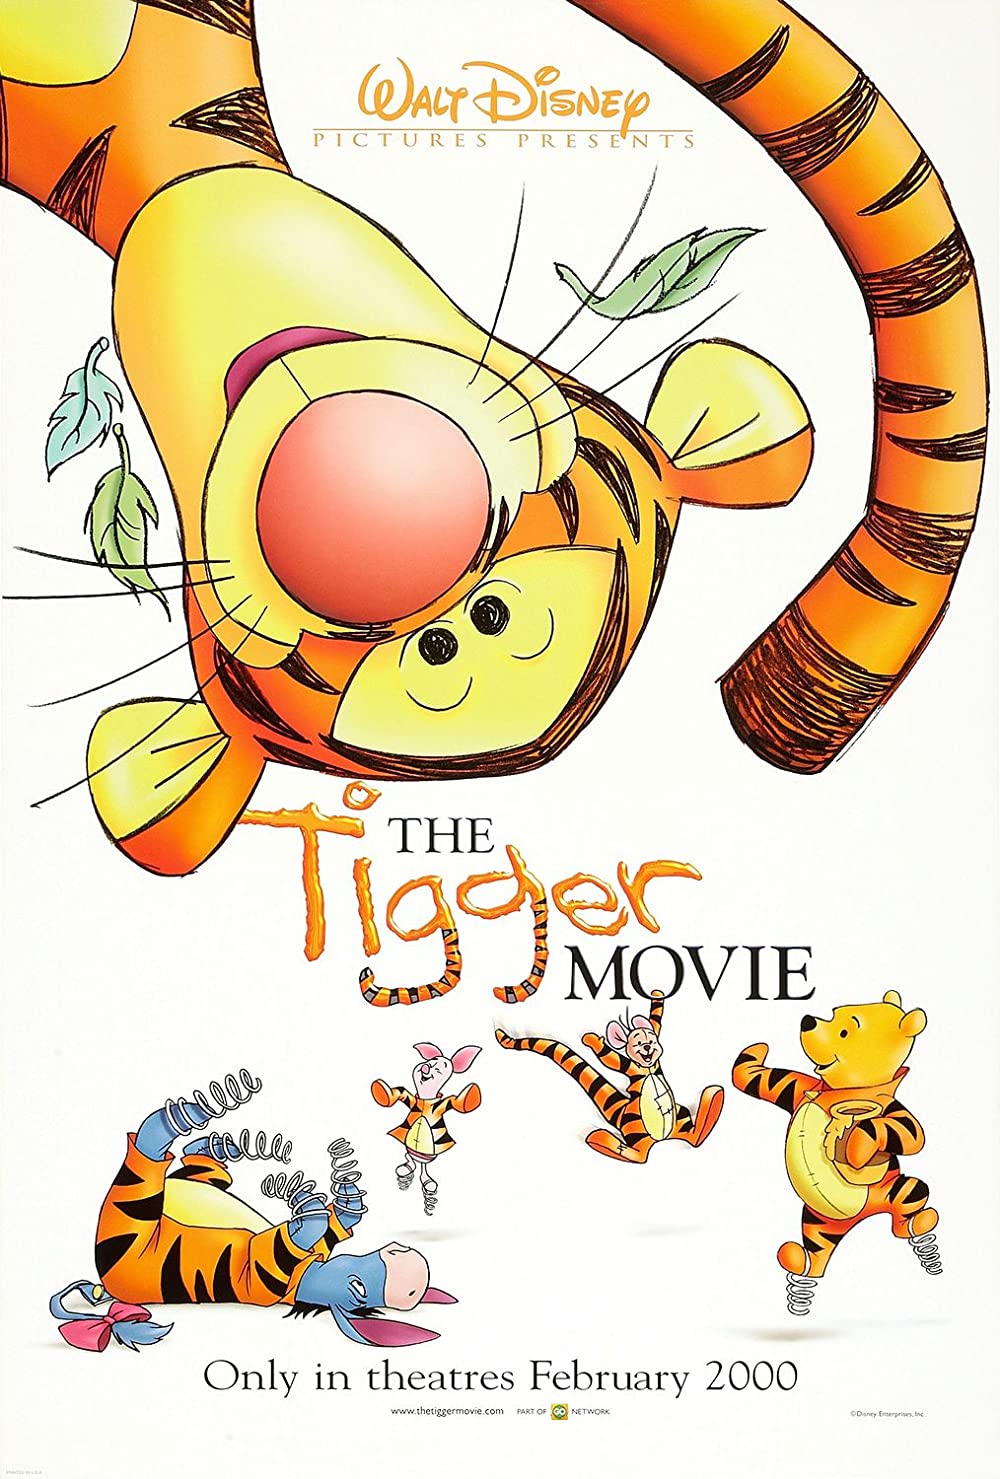 Filmbeschreibung zu Tiggers großes Abenteuer